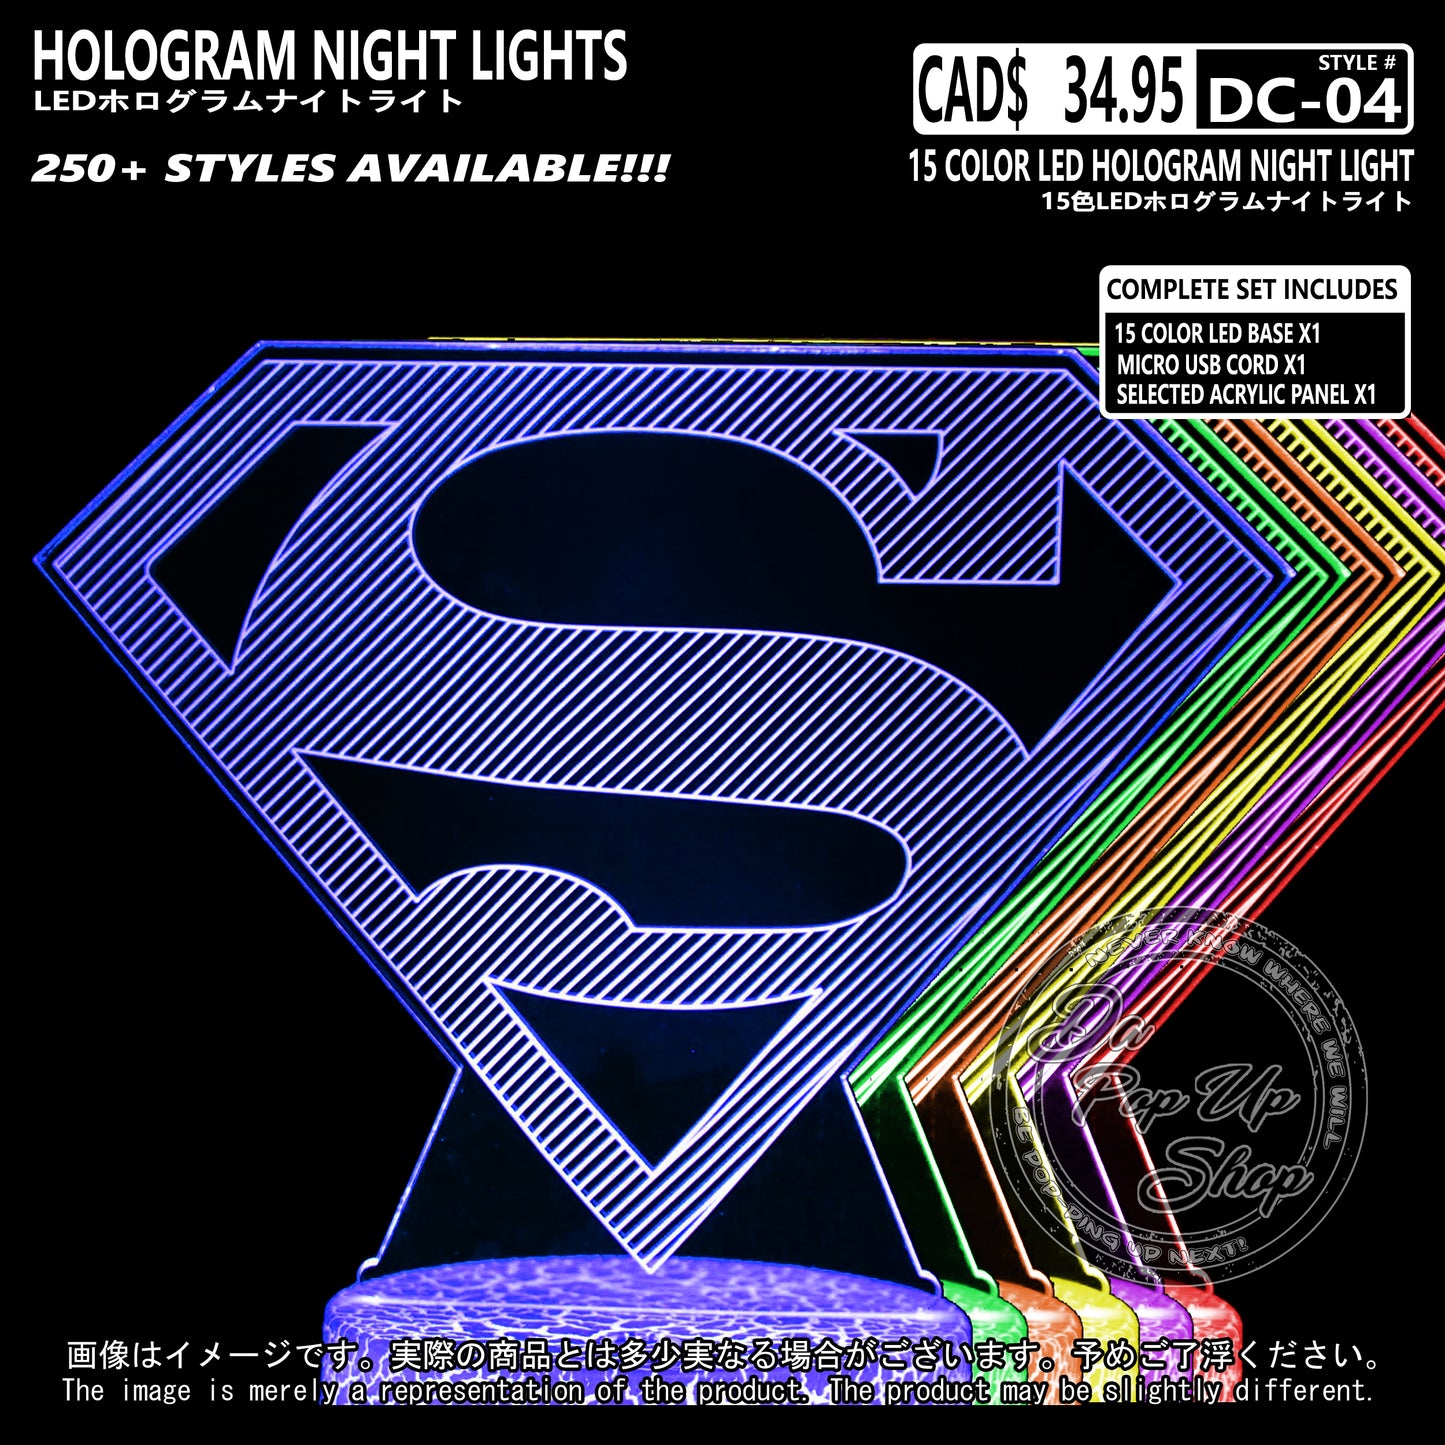 (DC-04) DC Hologram LED Night Light